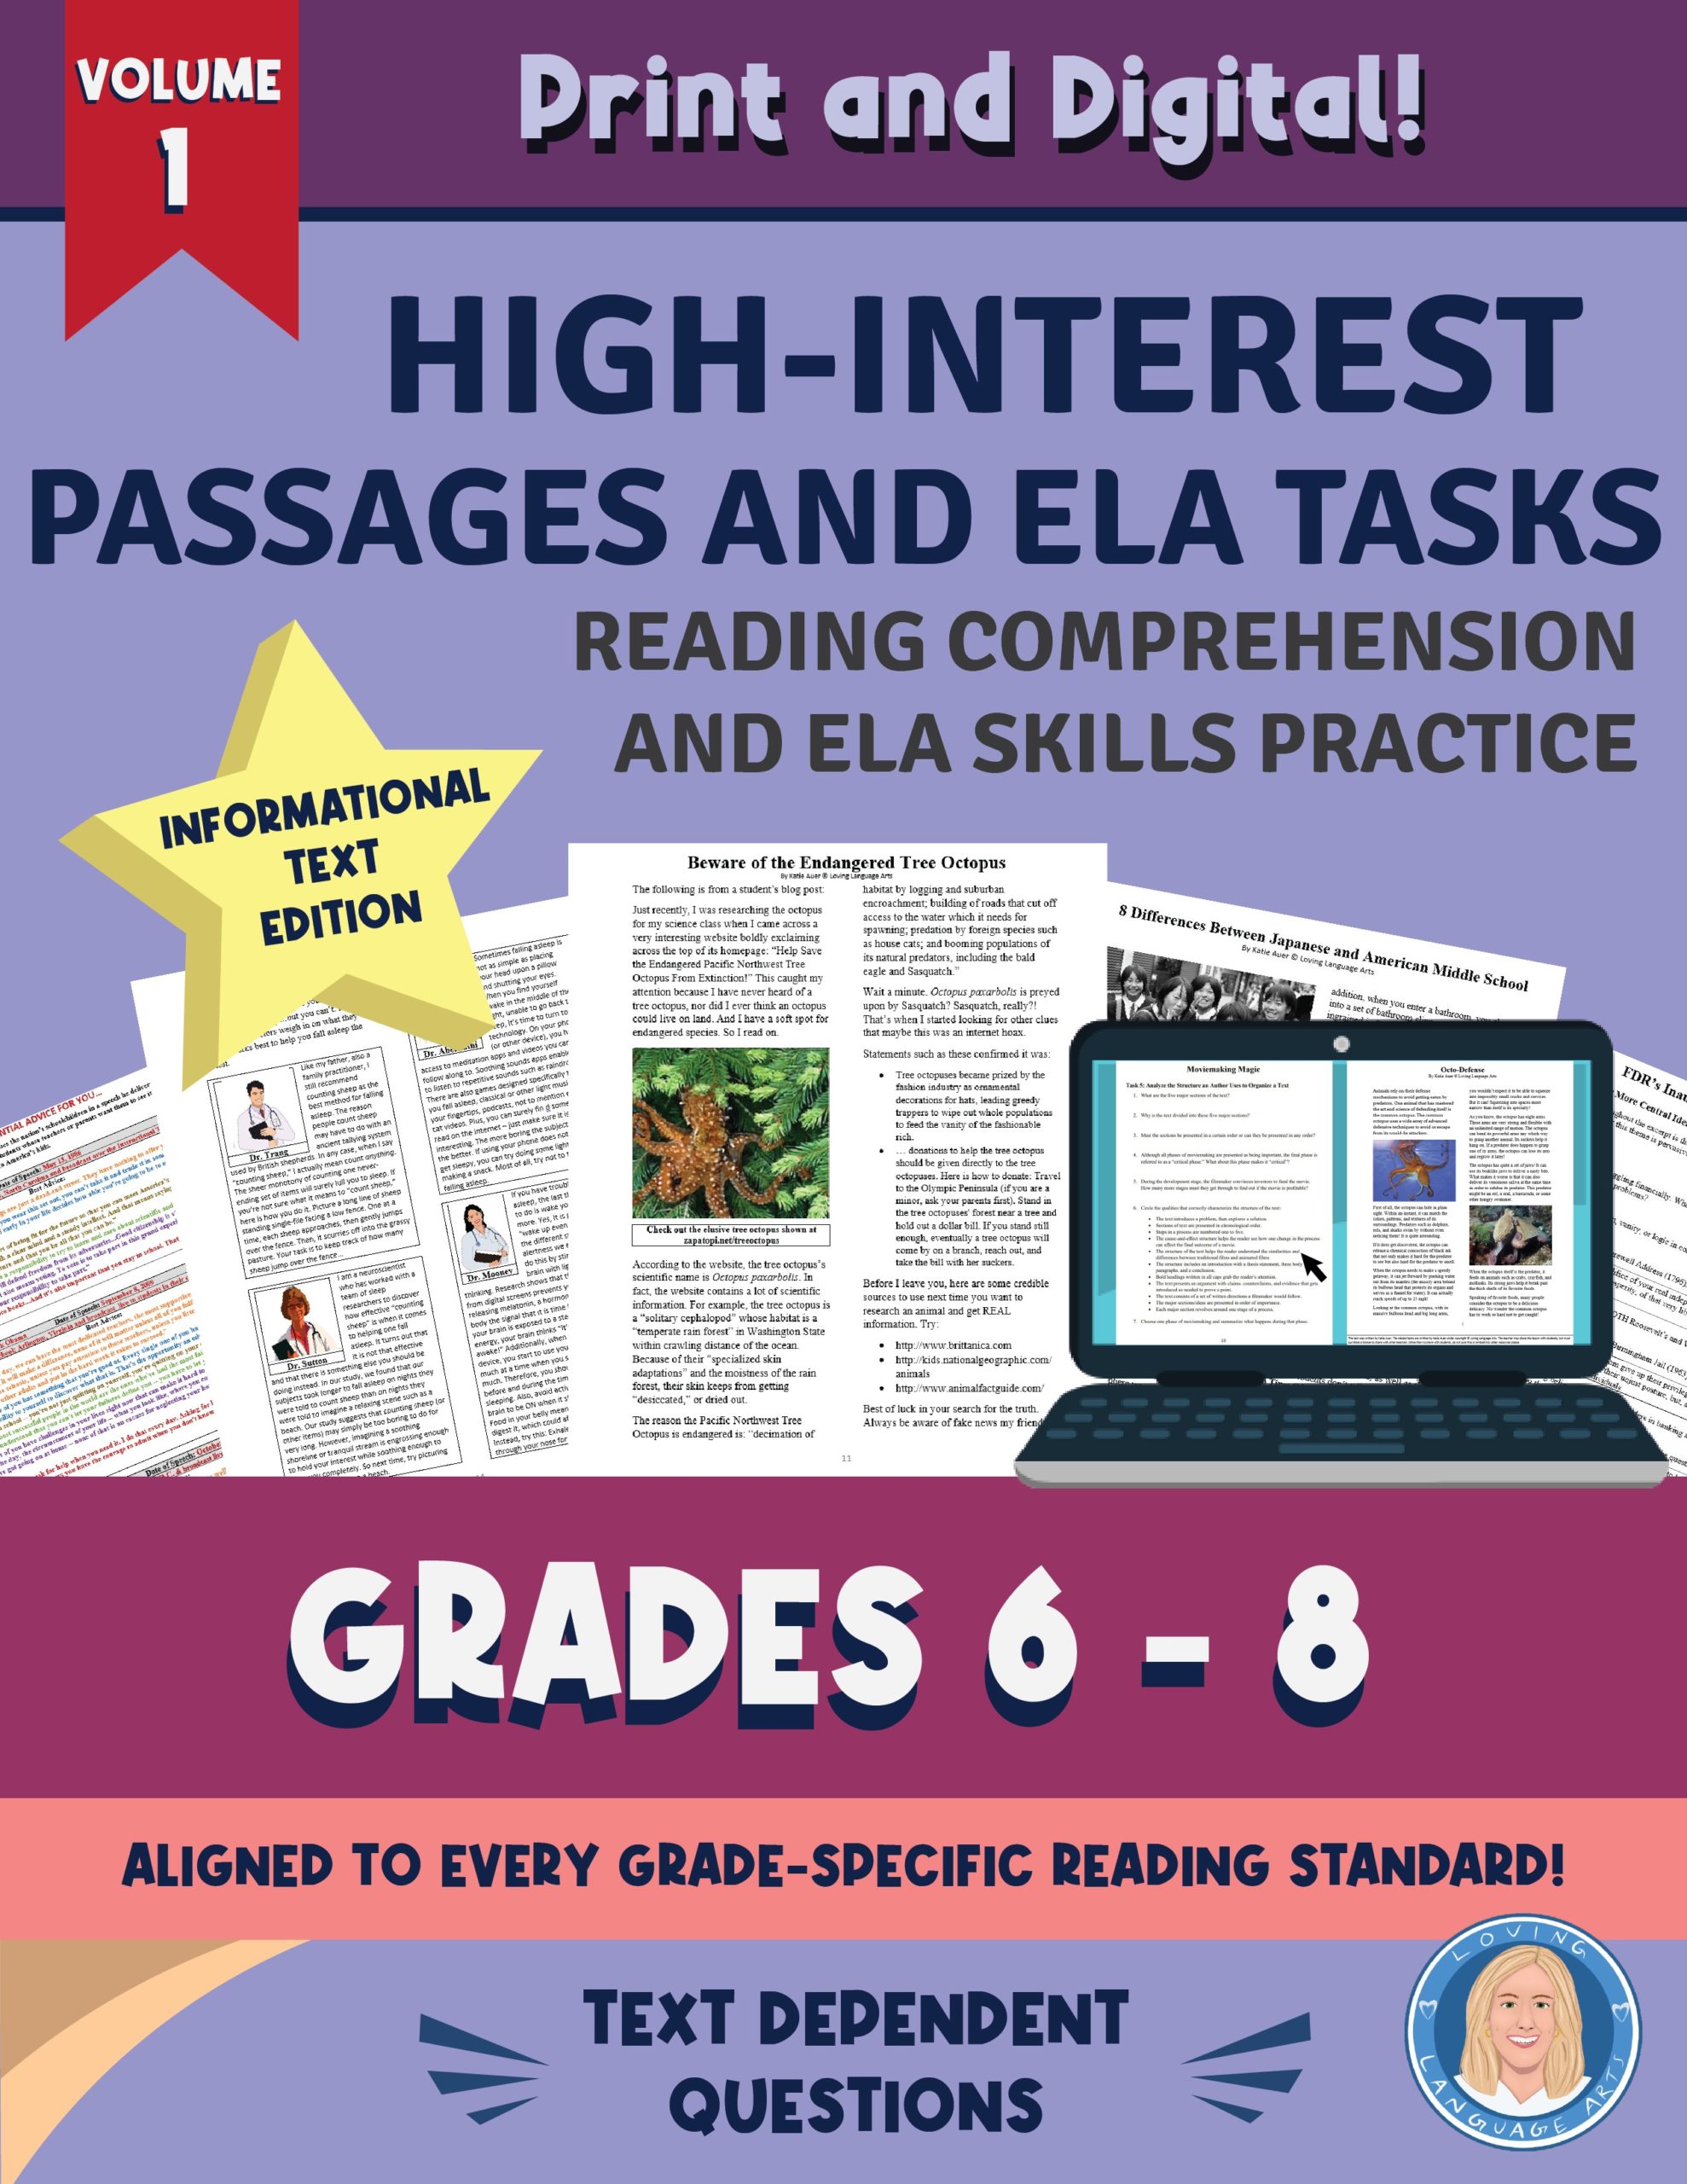 6th-8th grade language arts workbook volume 1 - High-interest passages and tasks.